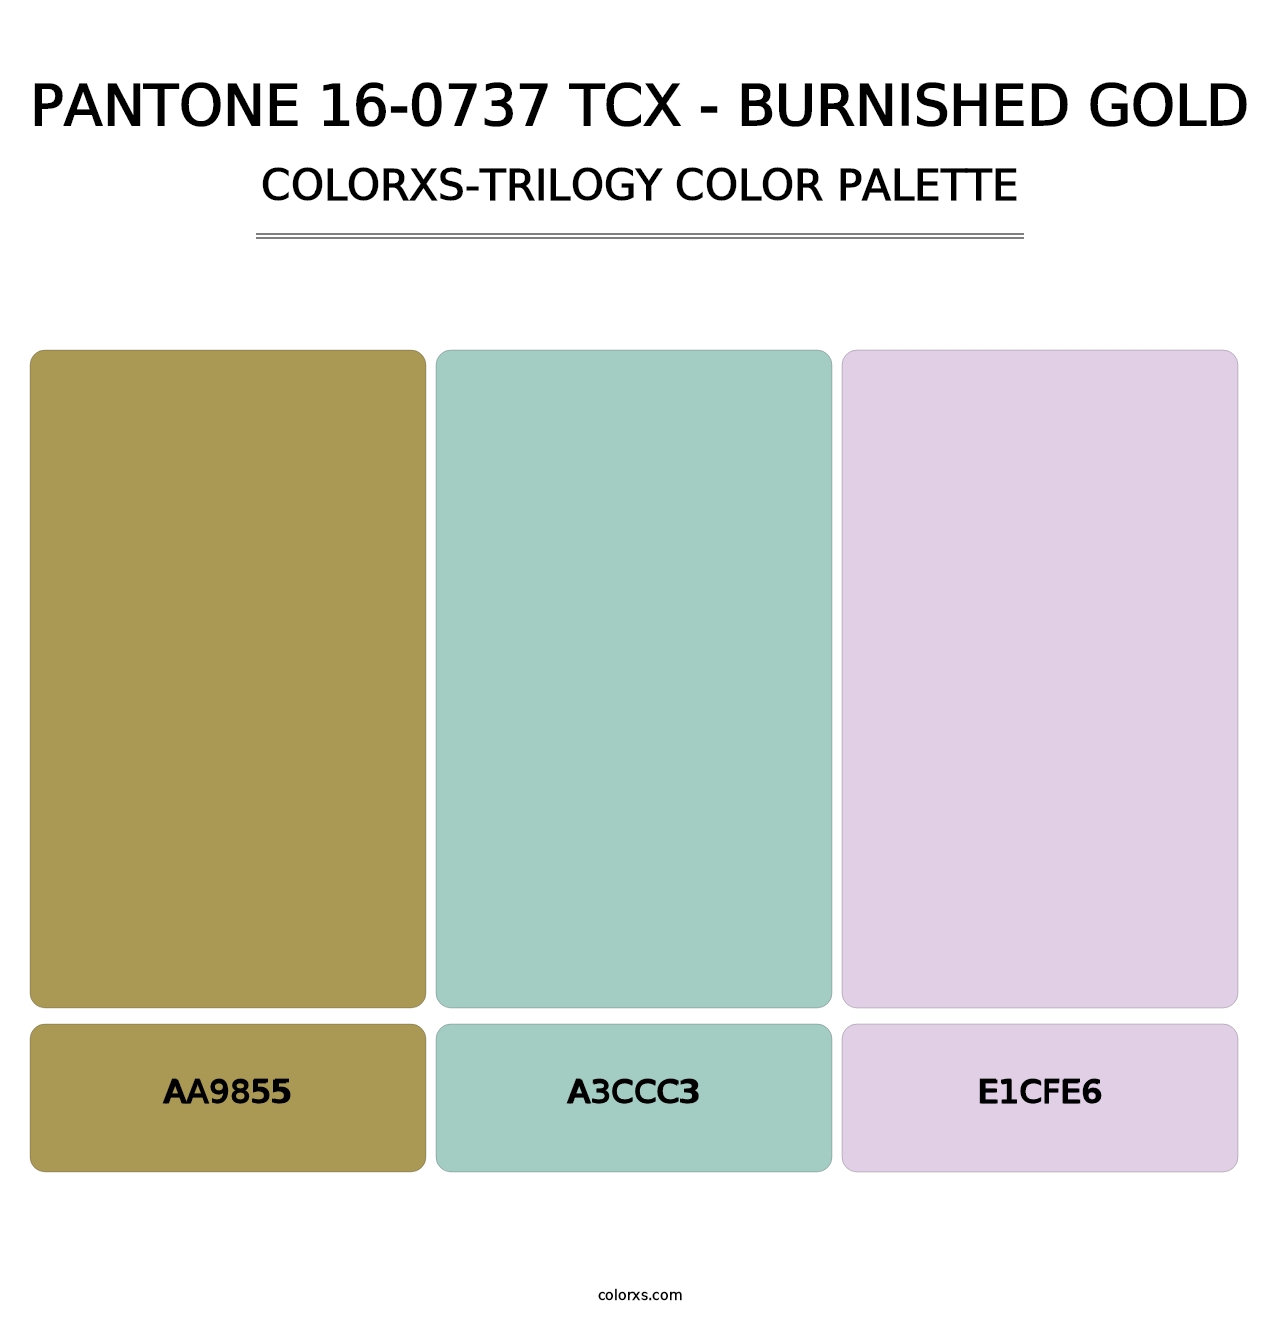 PANTONE 16-0737 TCX - Burnished Gold - Colorxs Trilogy Palette